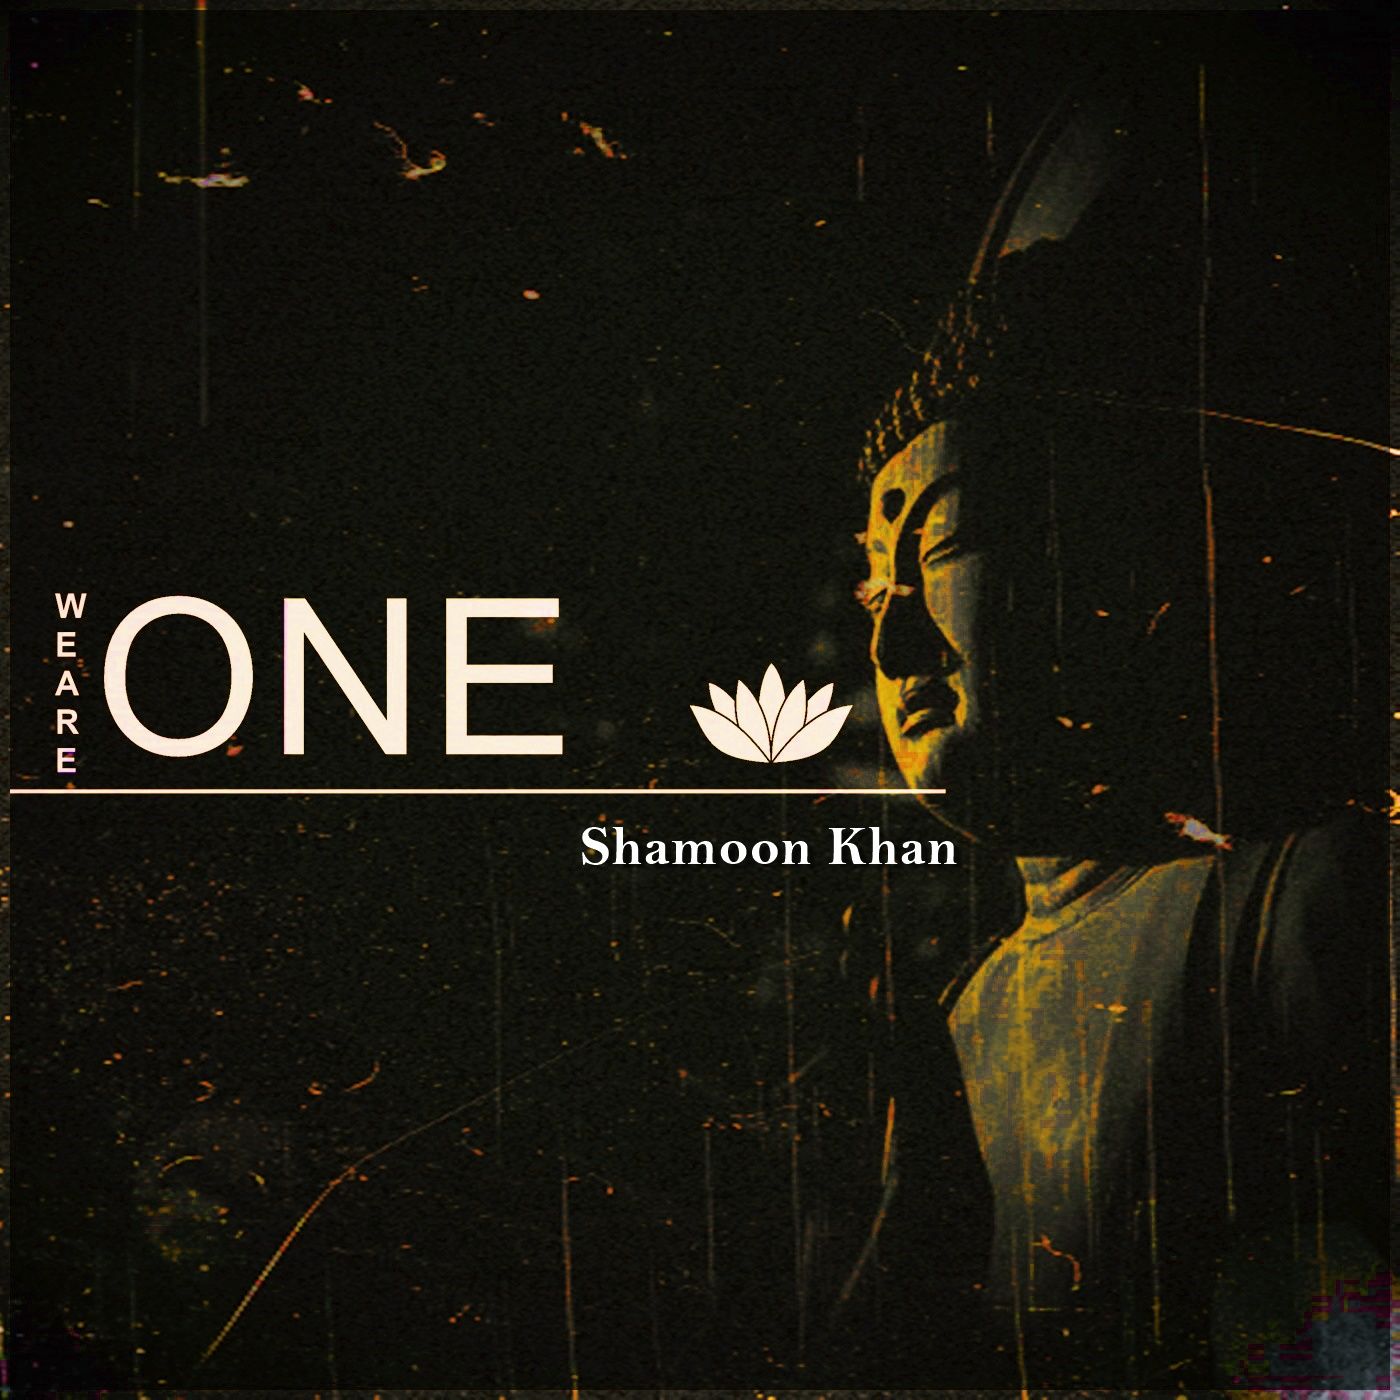 𝗪𝗲 𝗔𝗿𝗲 𝗢𝗻𝗲 - Interpretation by Shamoon Khan